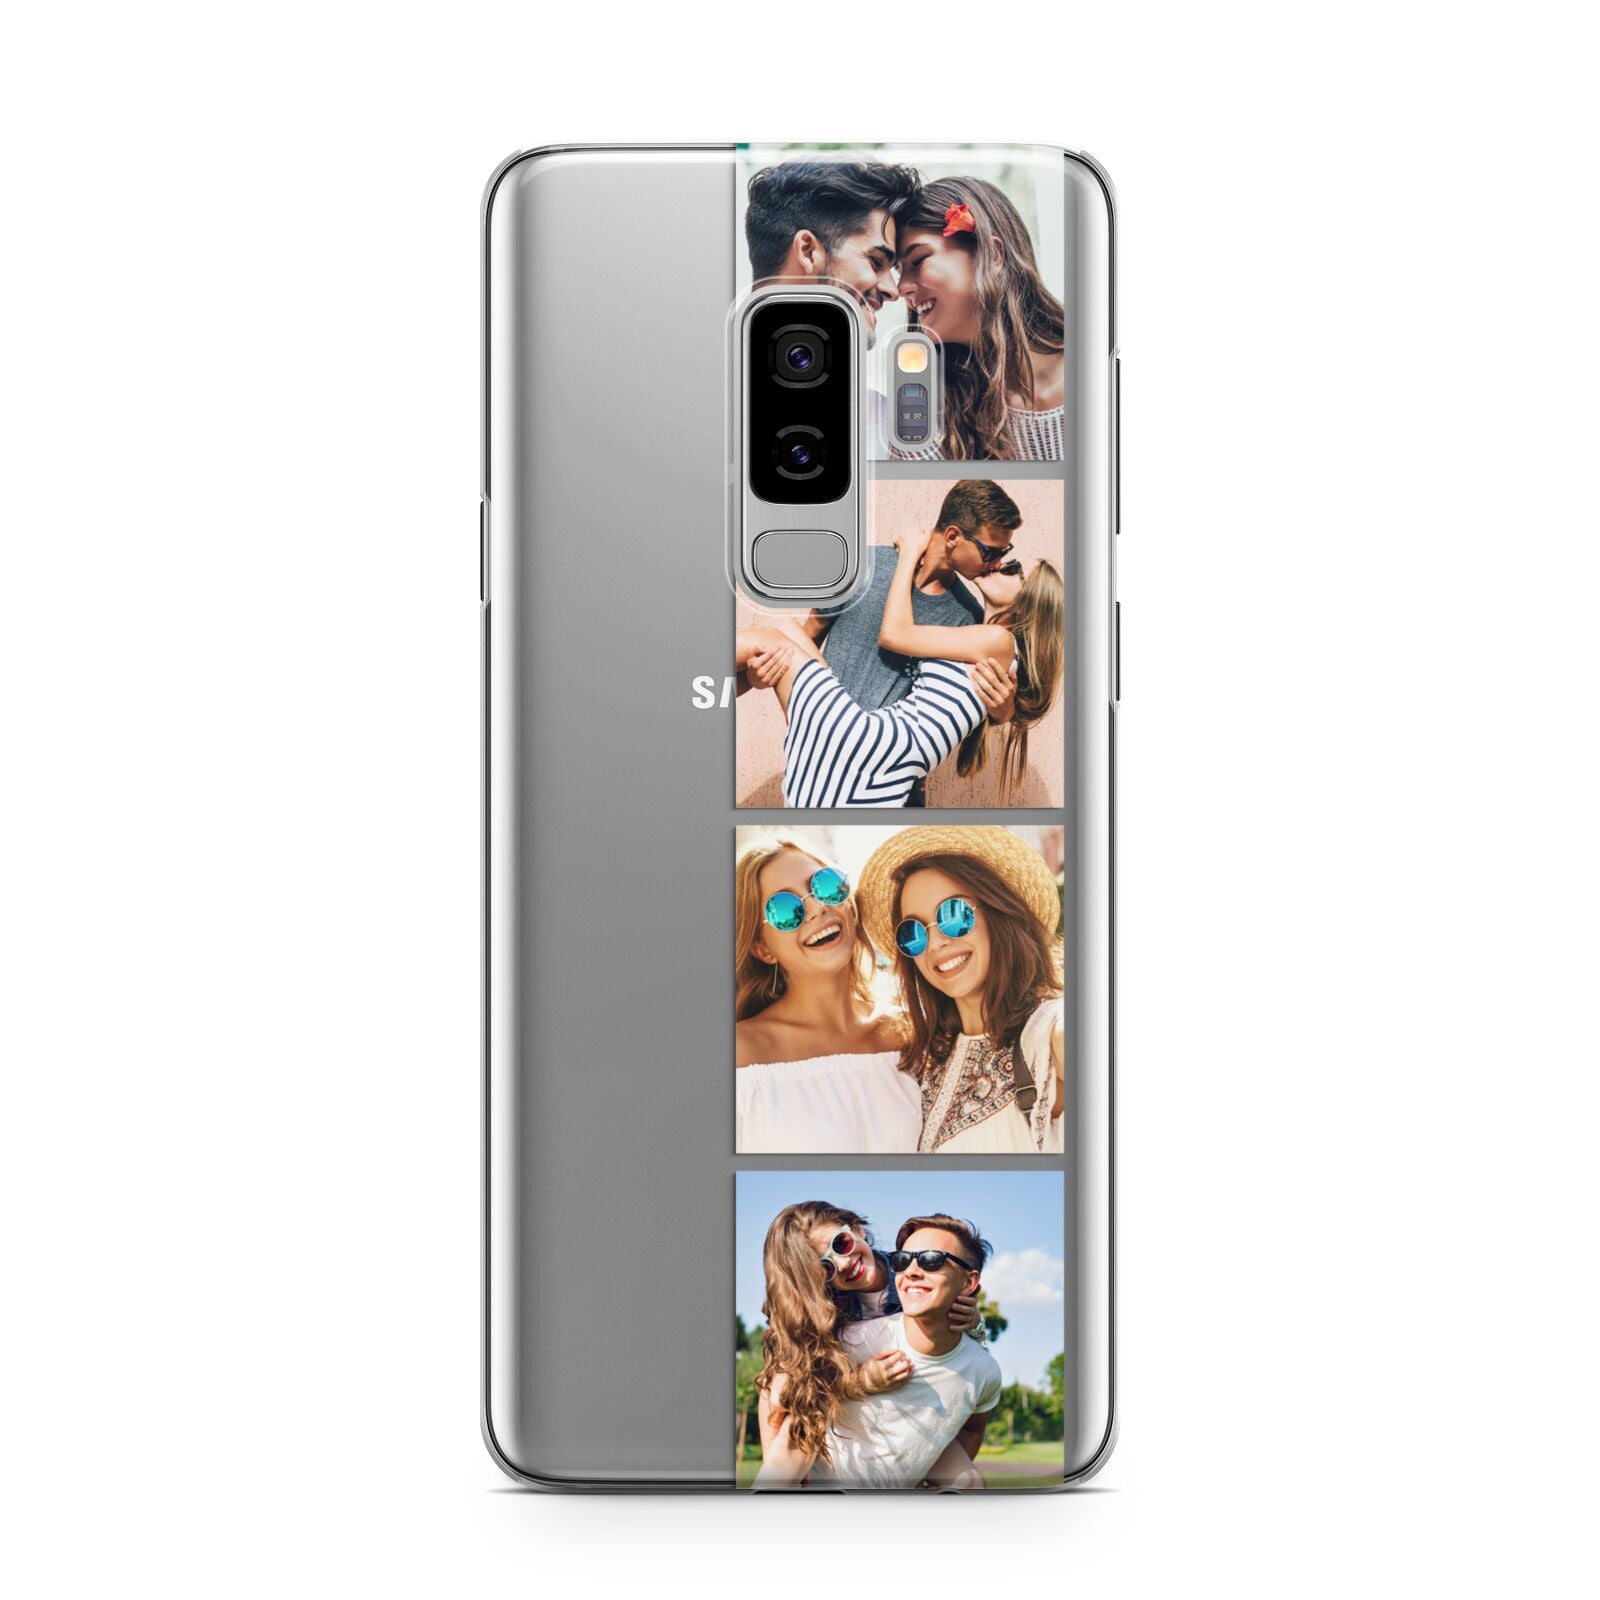 Photo Strip Montage Upload Samsung Galaxy S9 Plus Case on Silver phone